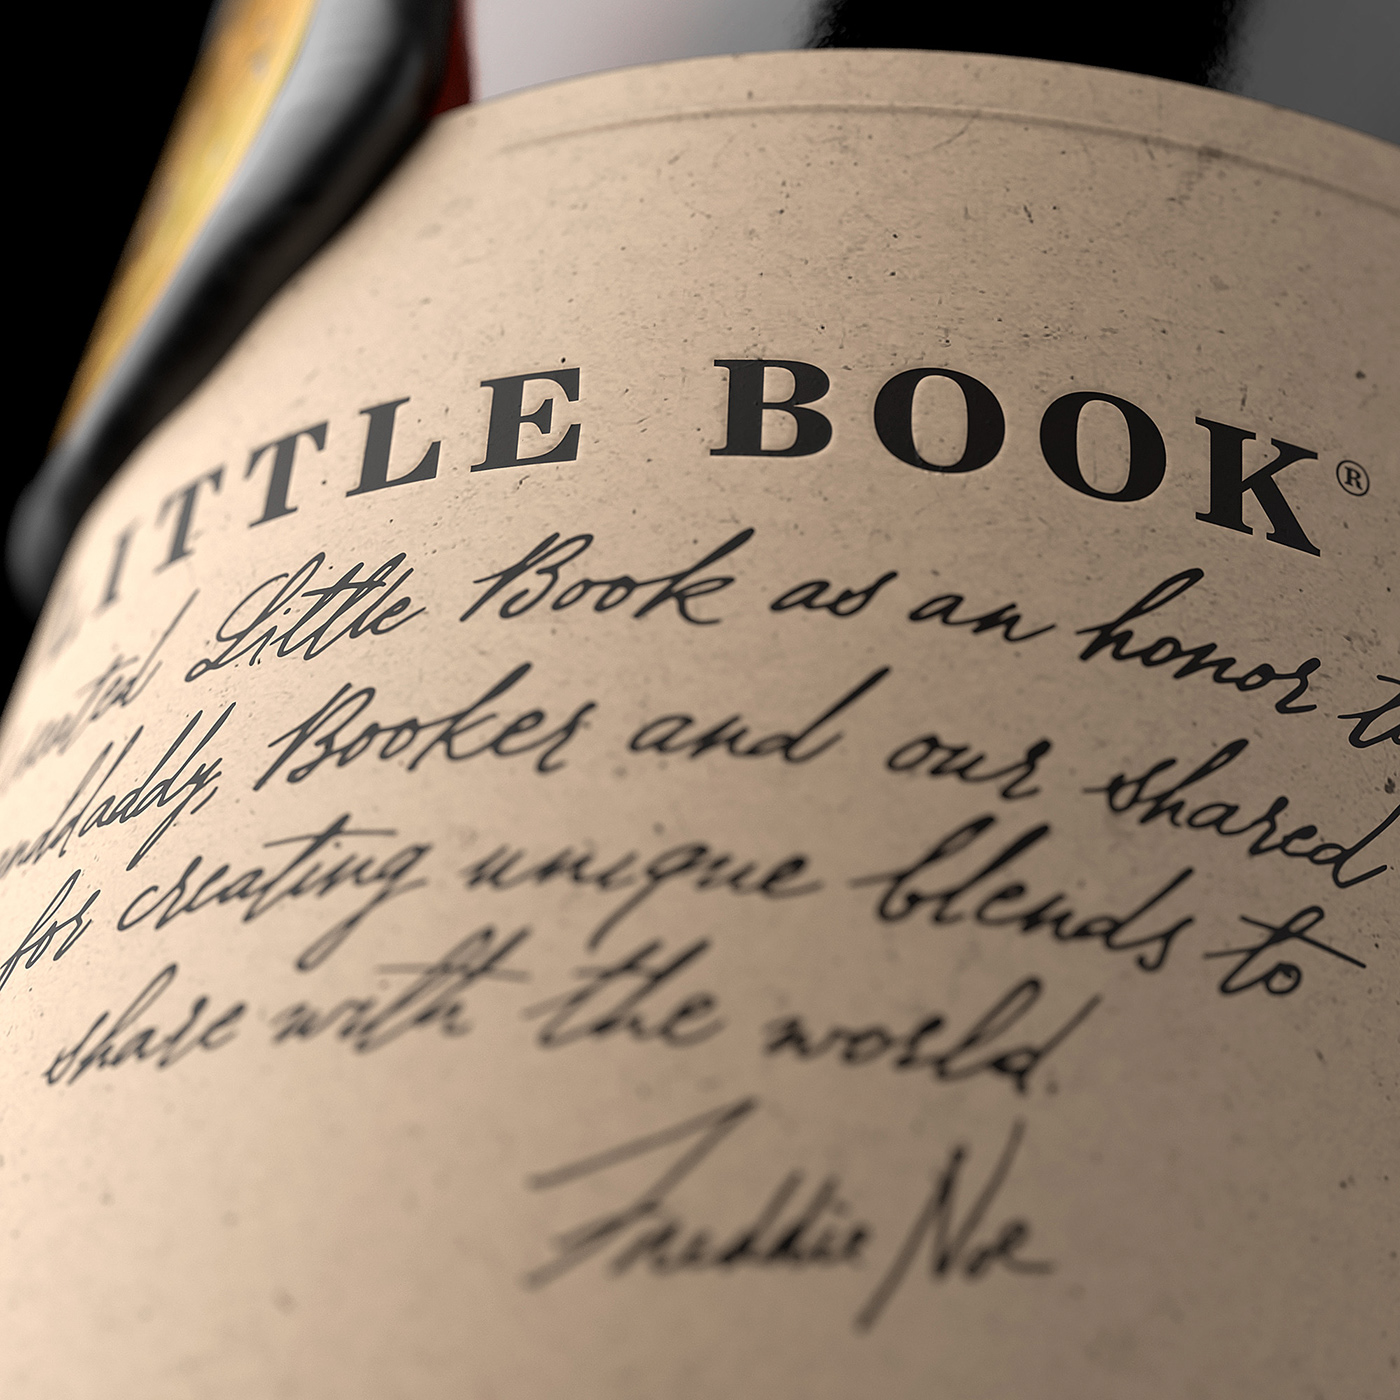 alcohol bottle Bourbon Whiskey box CGI Freddie Noe little book Packaging product visual